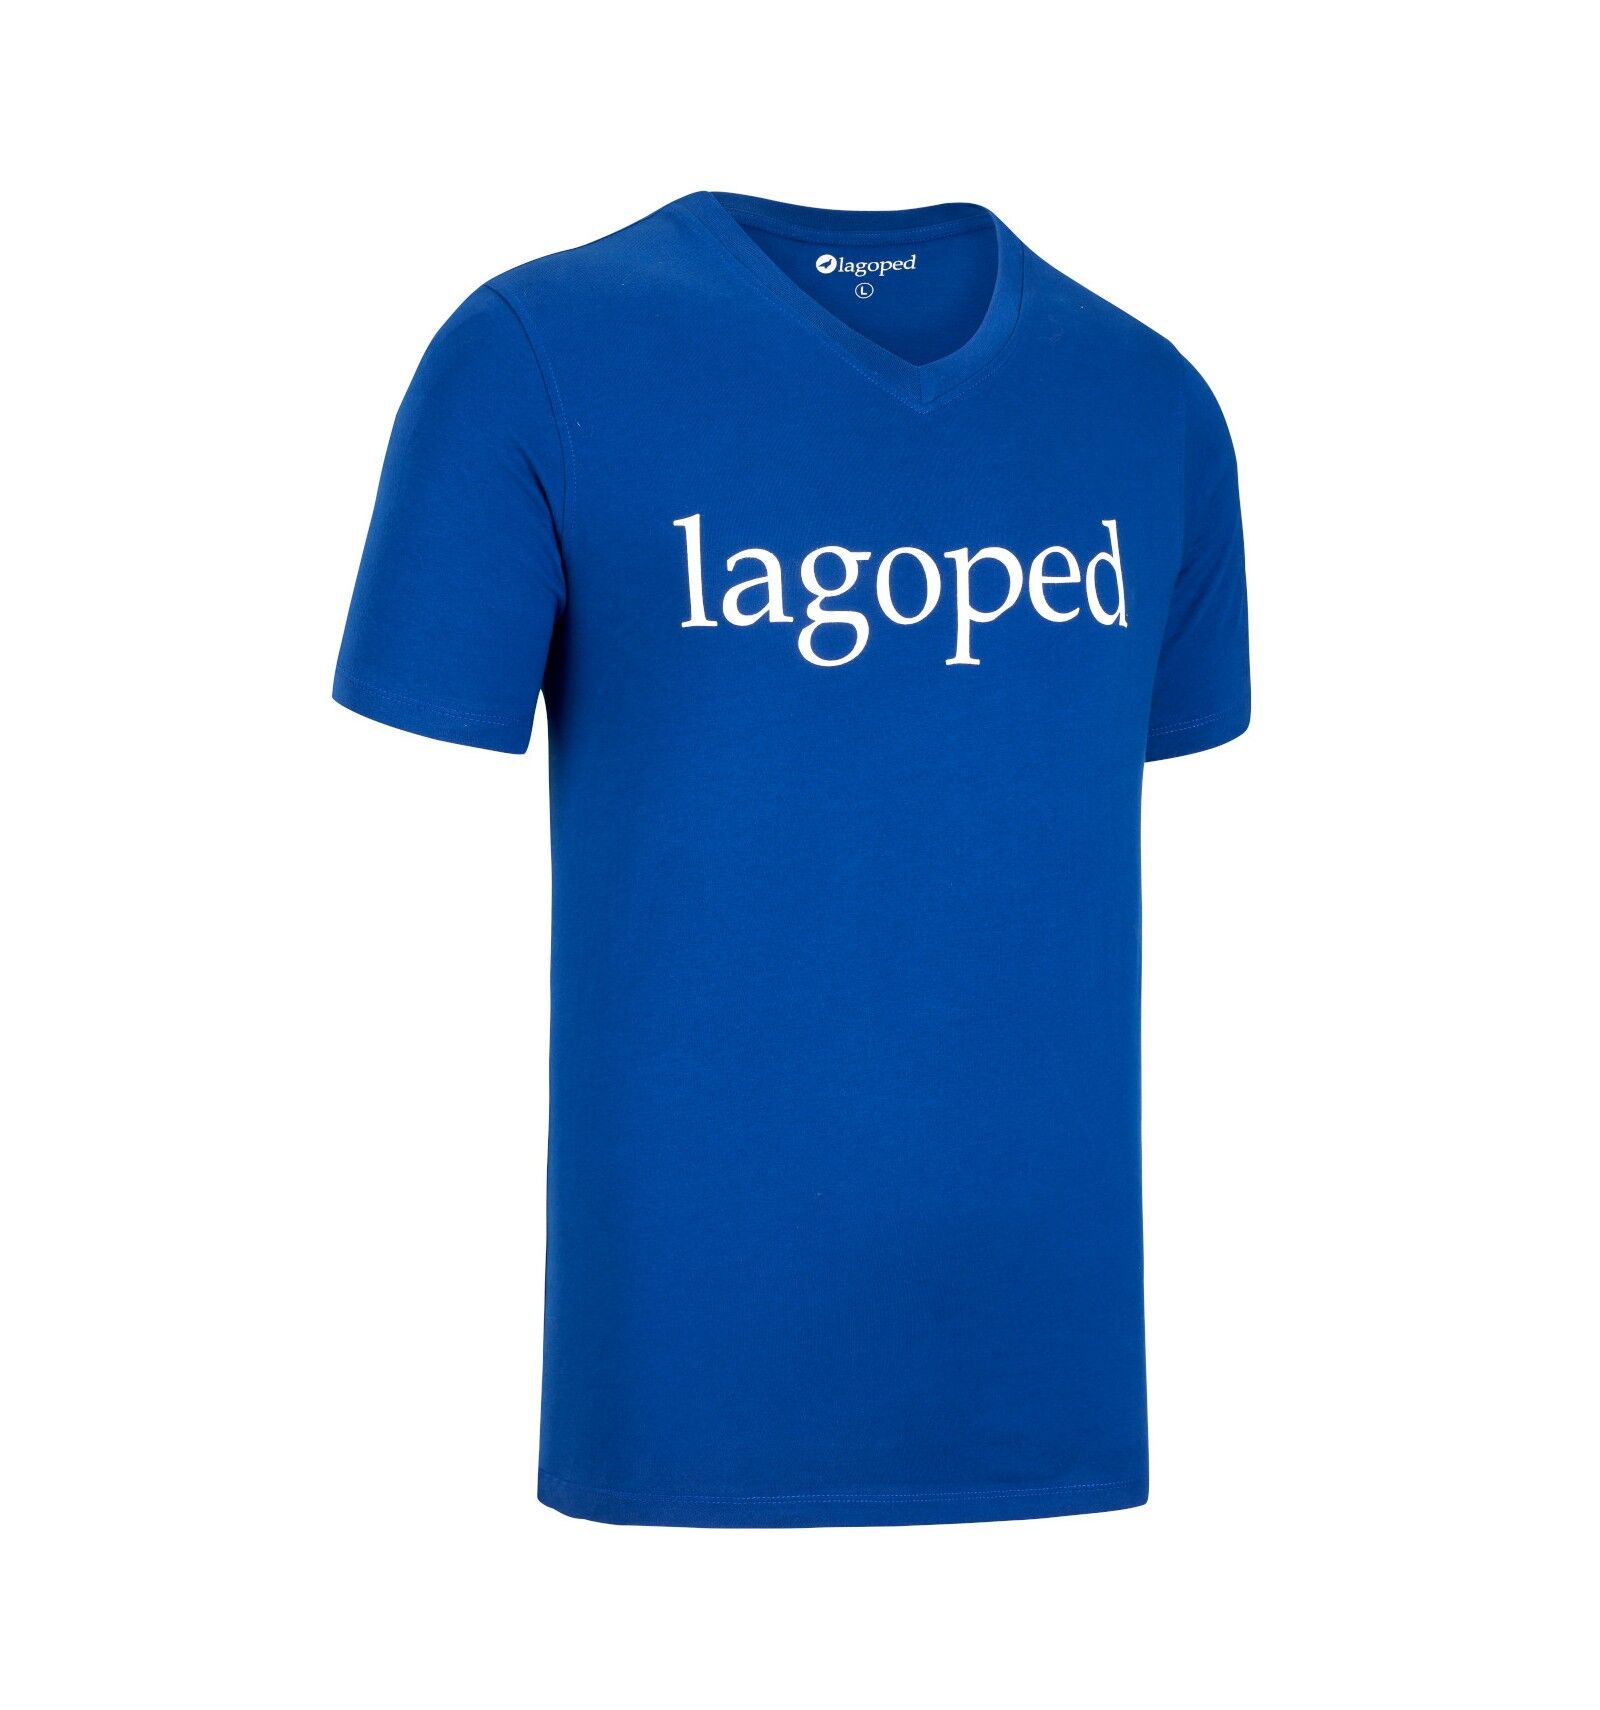 Lagoped Gotee - T-shirt - Men's